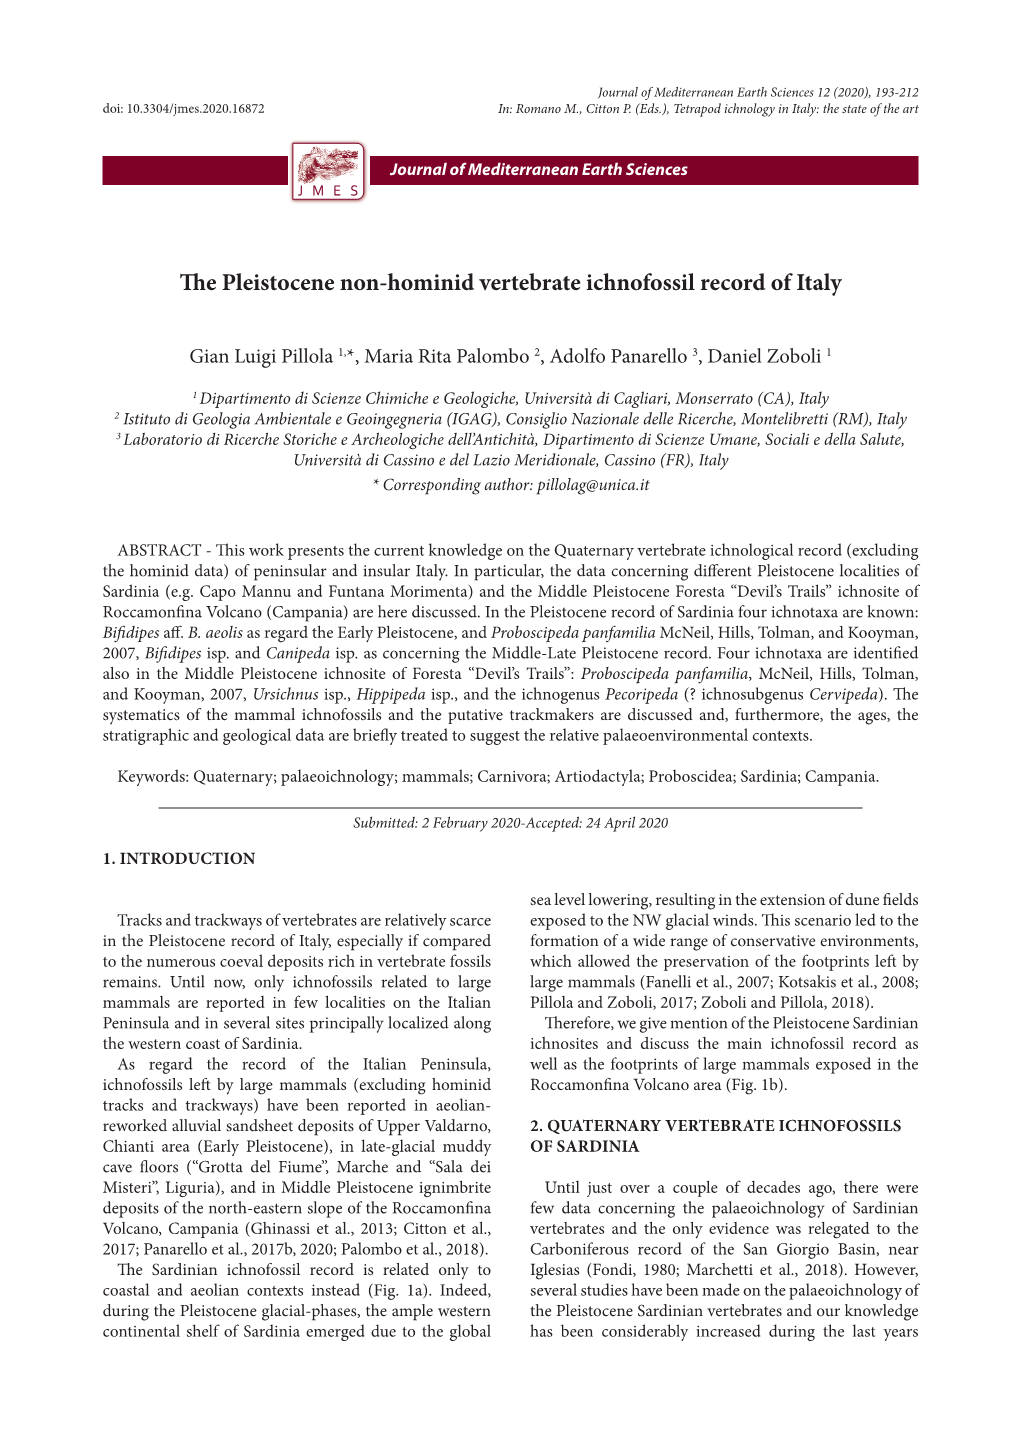 The Pleistocene Non-Hominid Vertebrate Ichnofossil Record of Italy